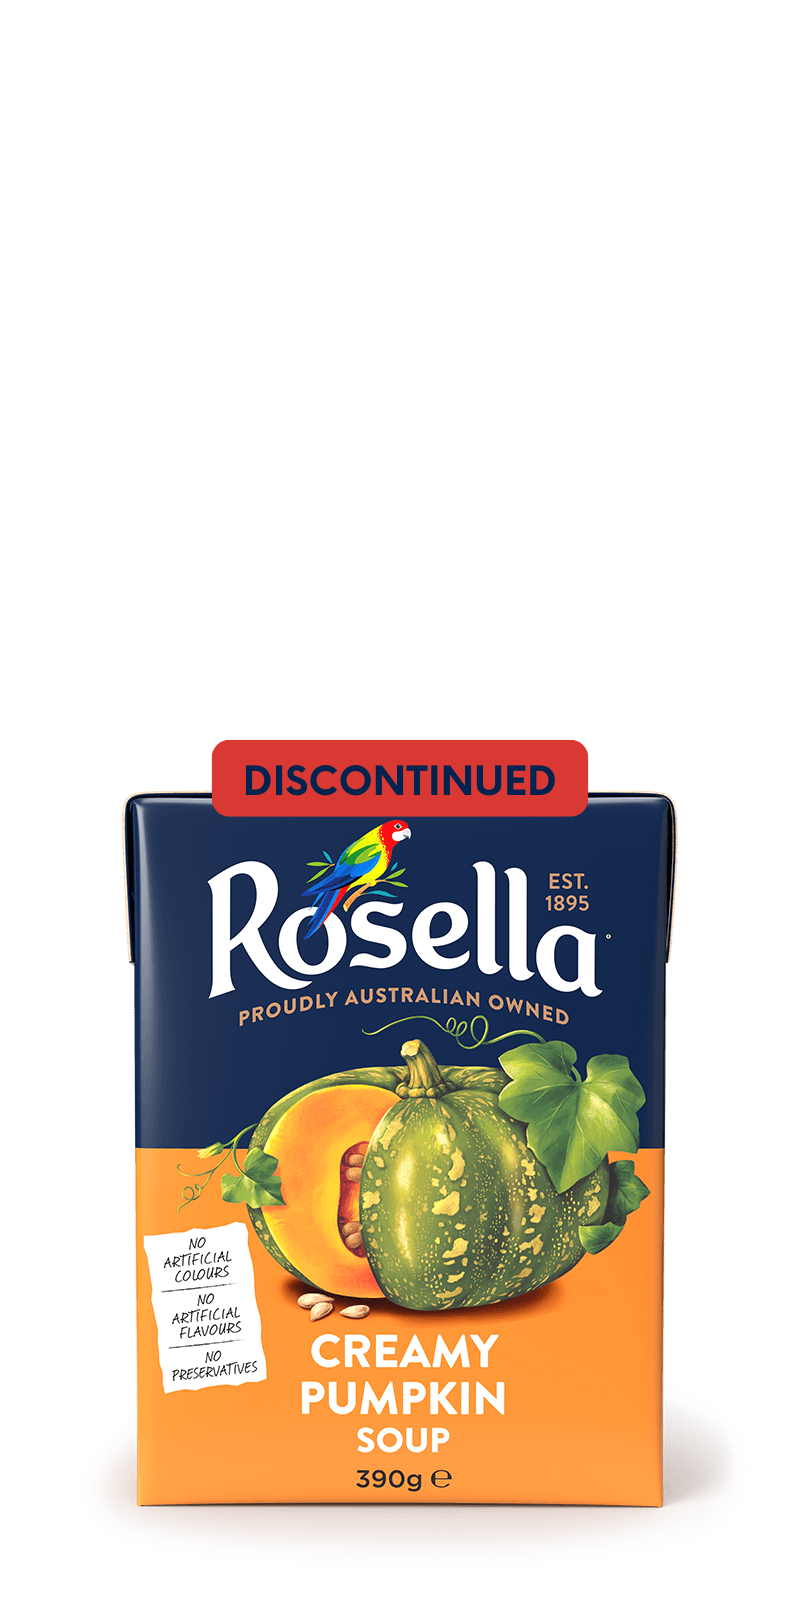 Rosella Pumpkin Soup Discontinued